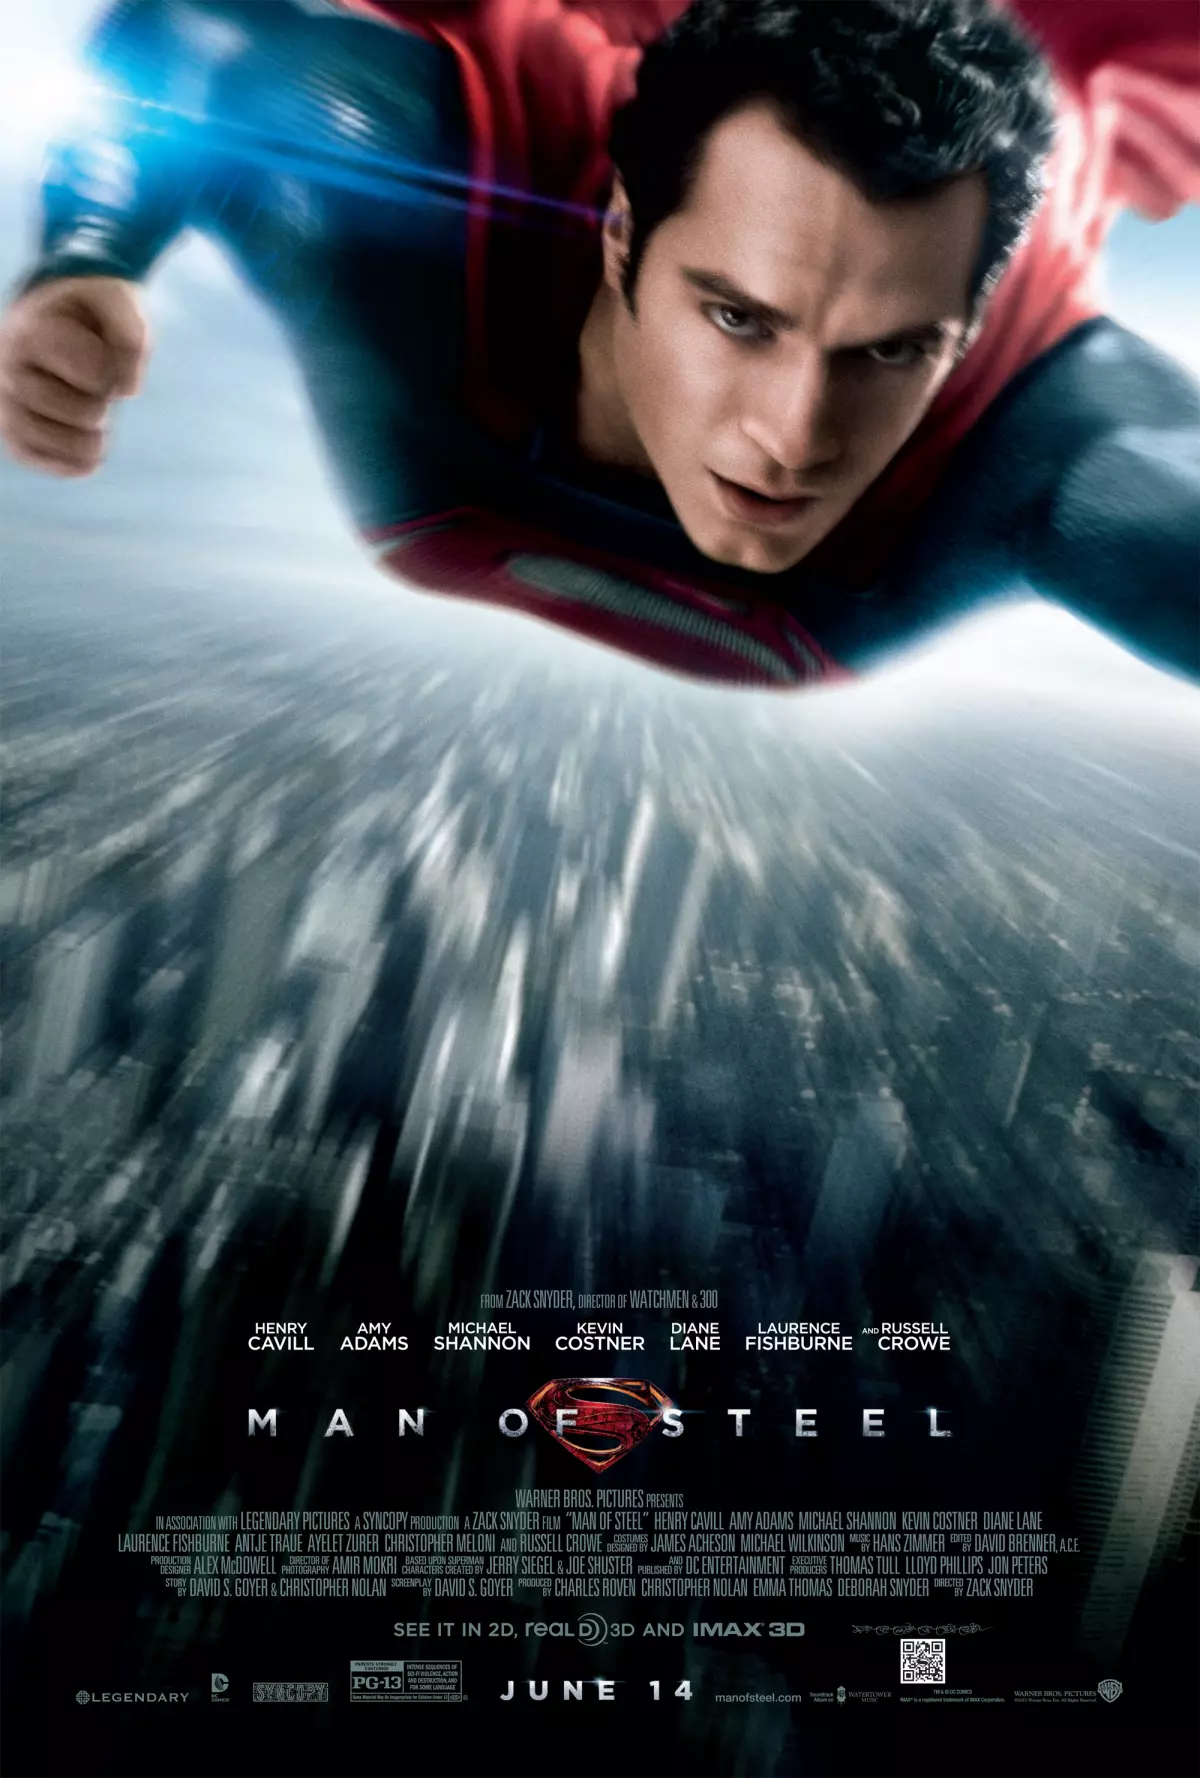 Man of Steel Poster 2